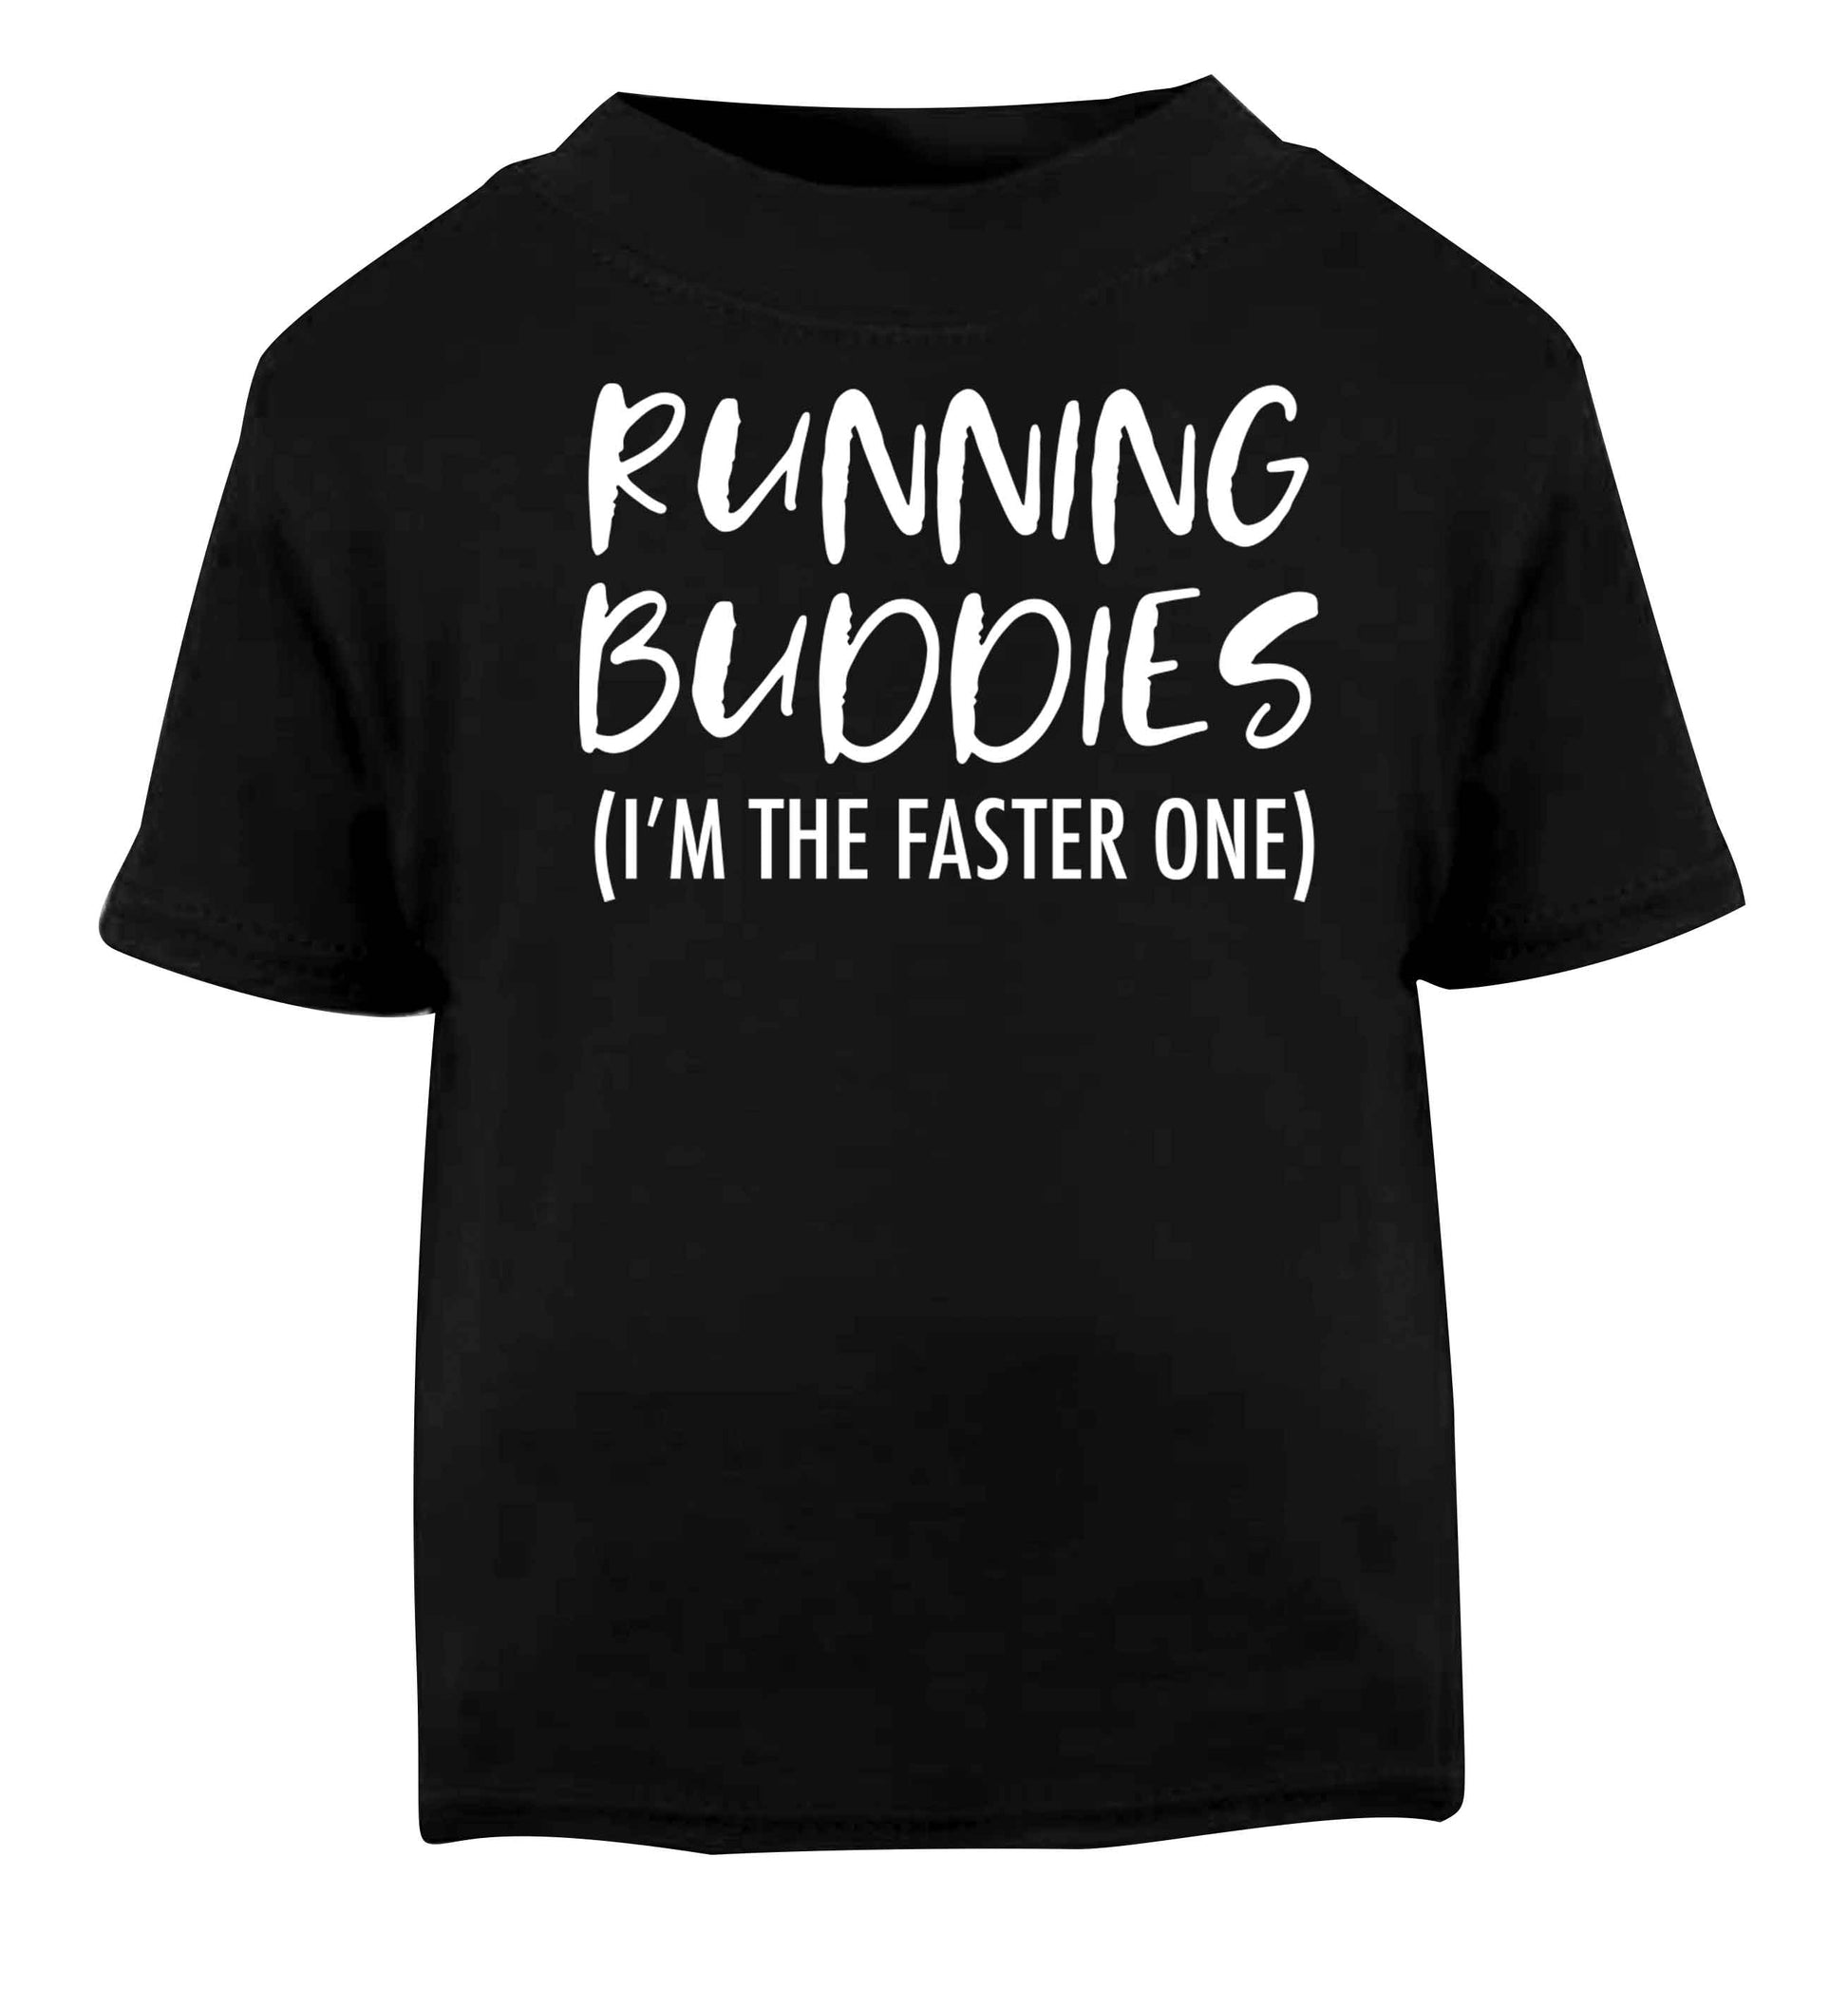 Running buddies (I'm the faster one) Black baby toddler Tshirt 2 years